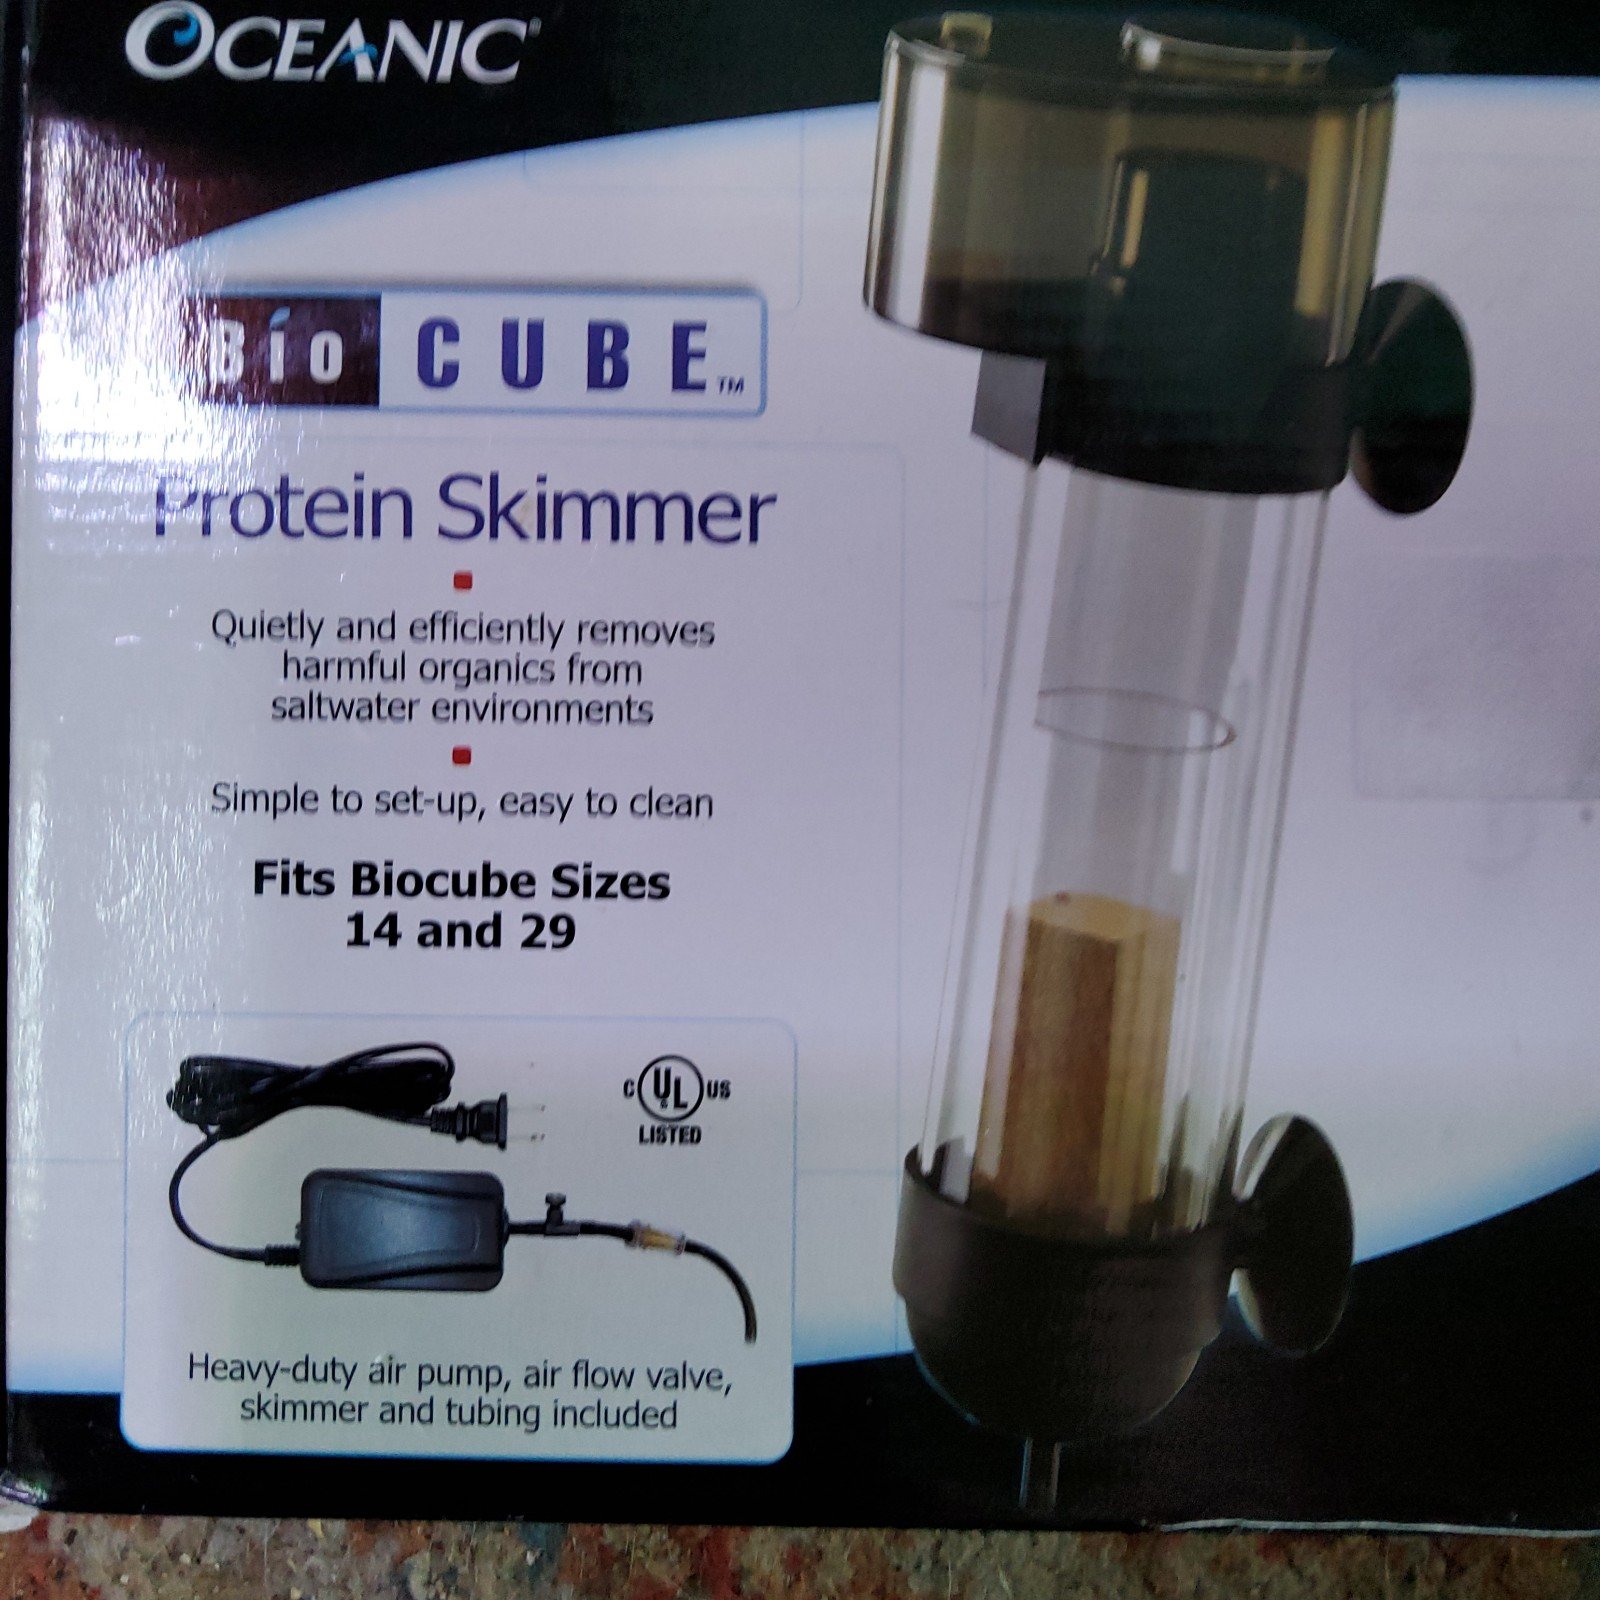 Oceanic Bio Cube Protein Skimmer #82053 Aquarium New Water Filter Biocube DcTExsm73